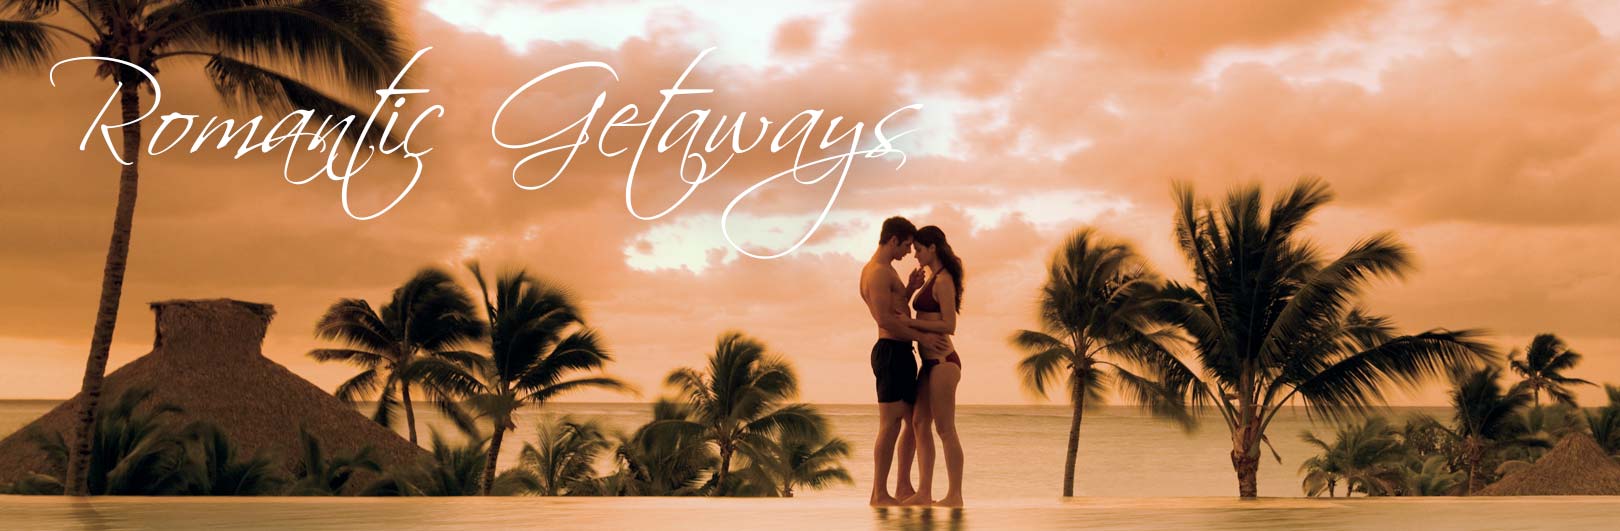 Romantic Getaways